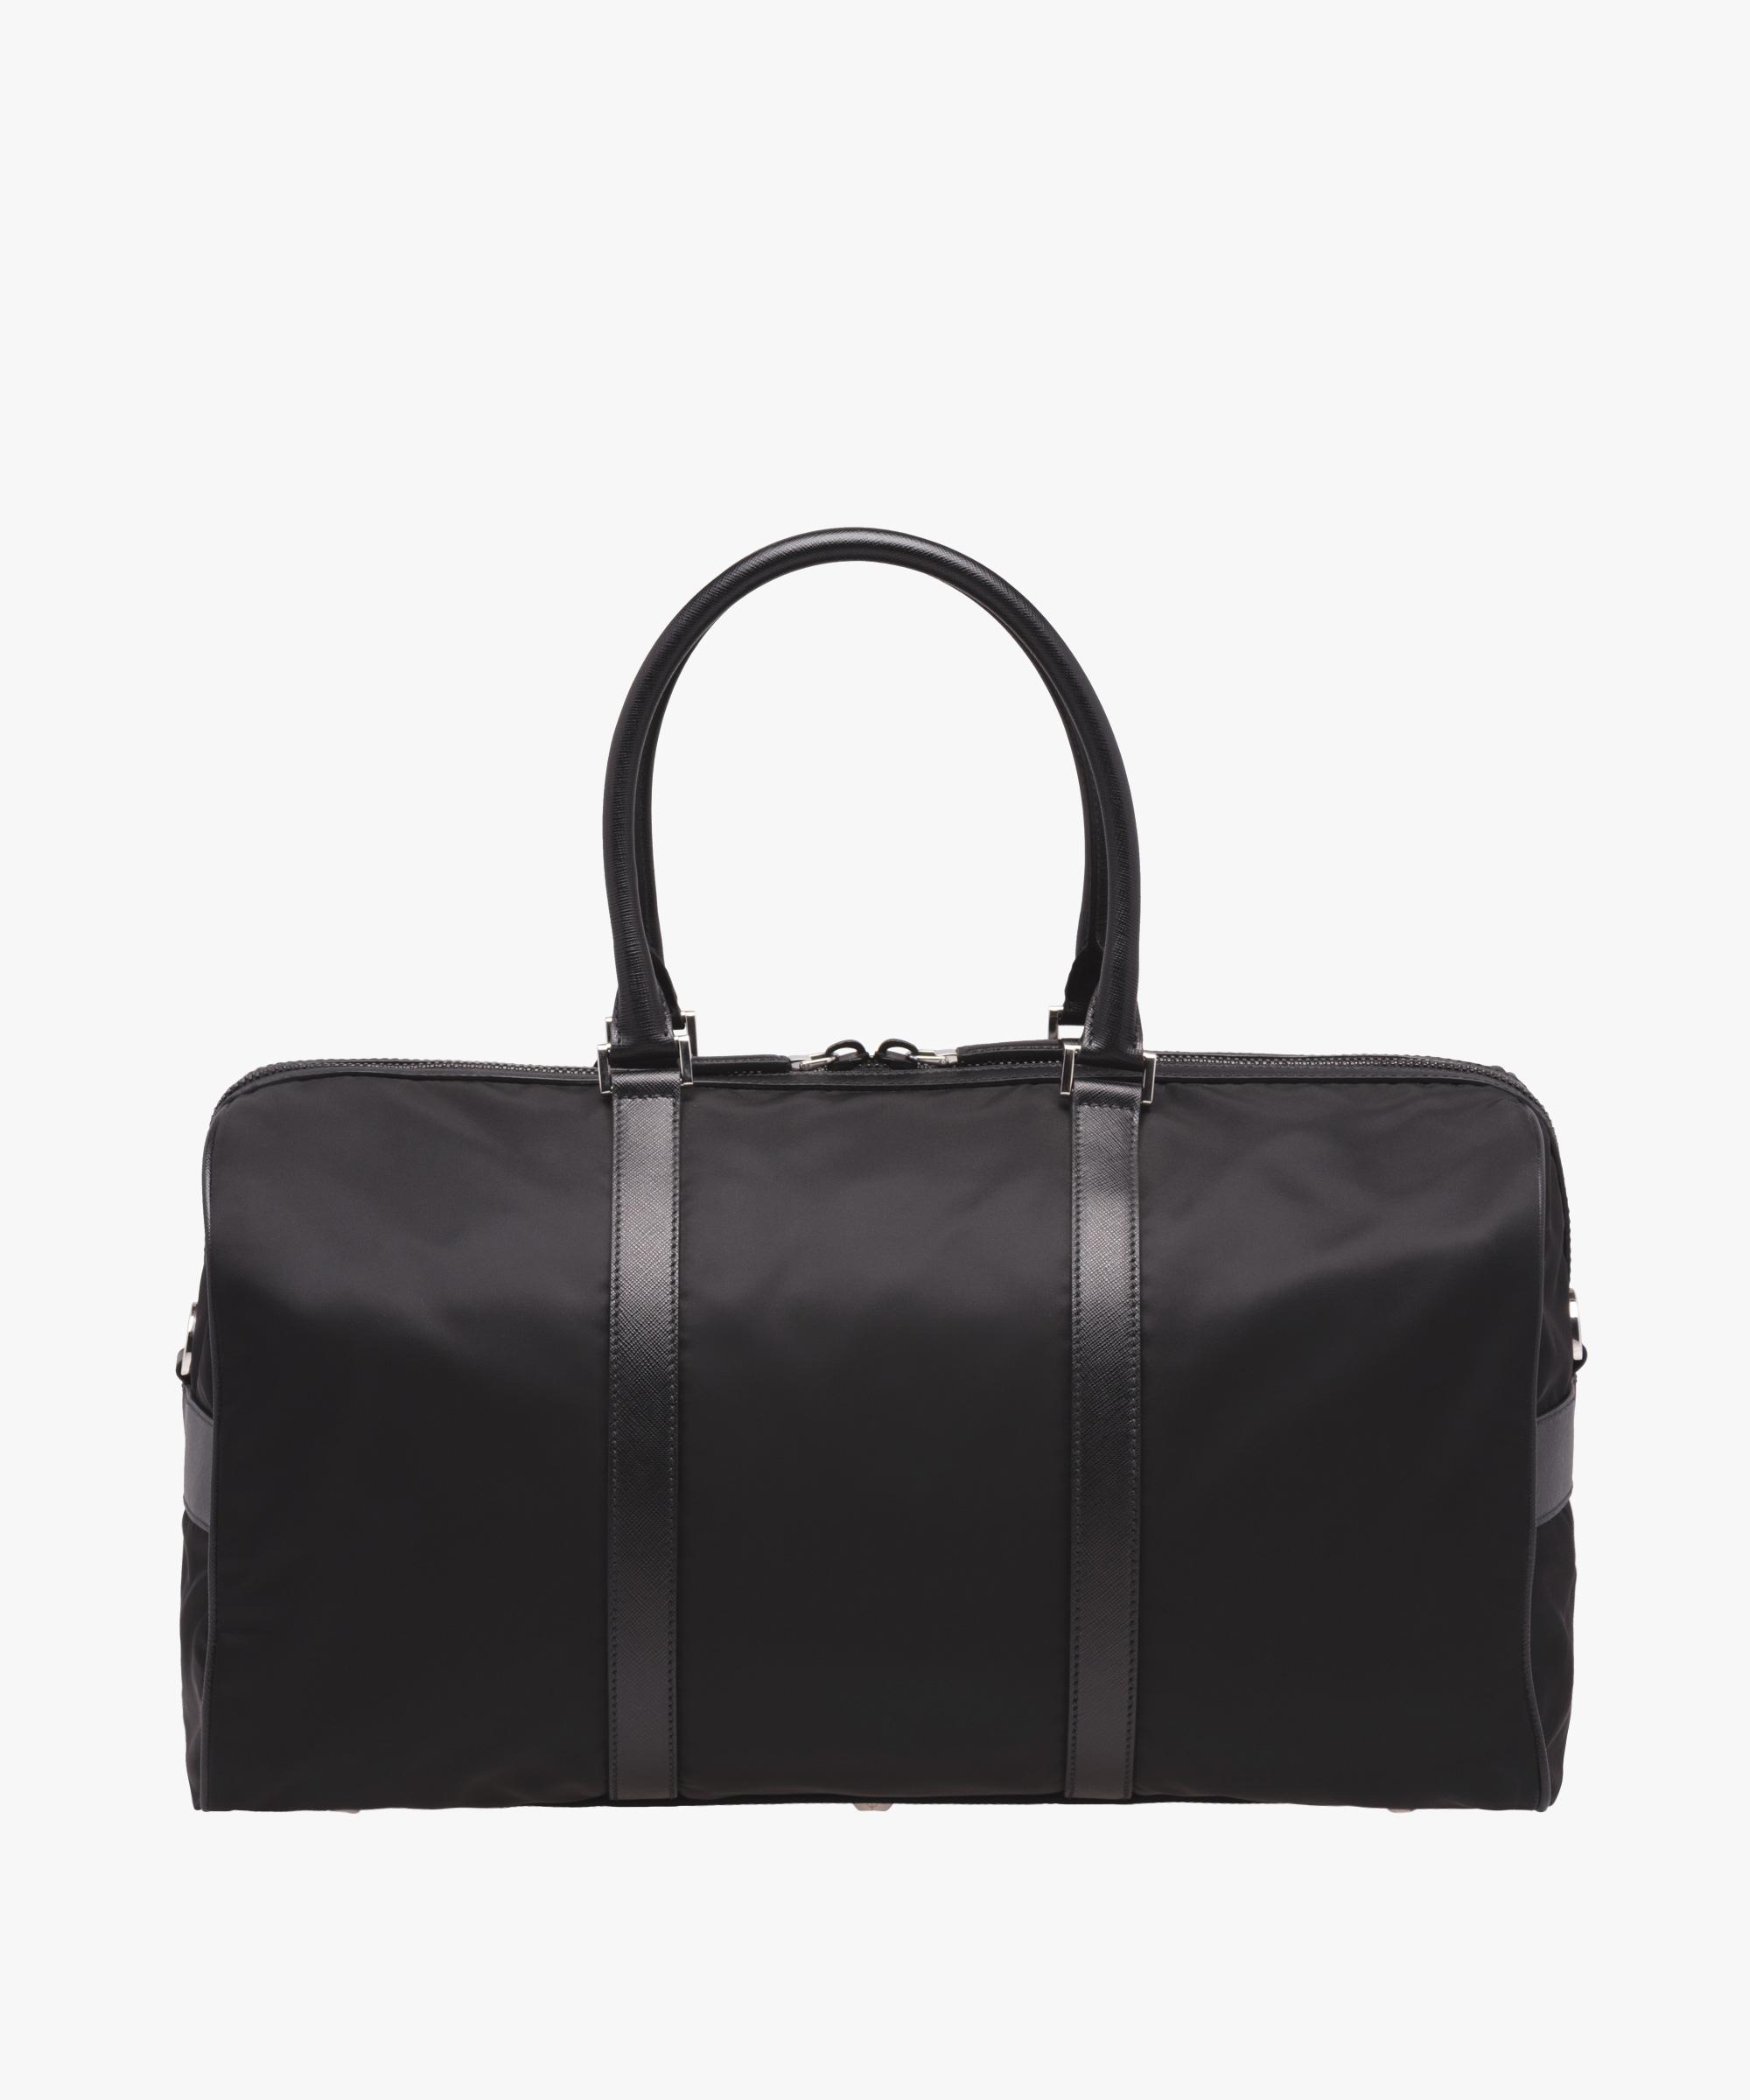 Prada Synthetic Nylon Travel Bag in Black for Men - Lyst